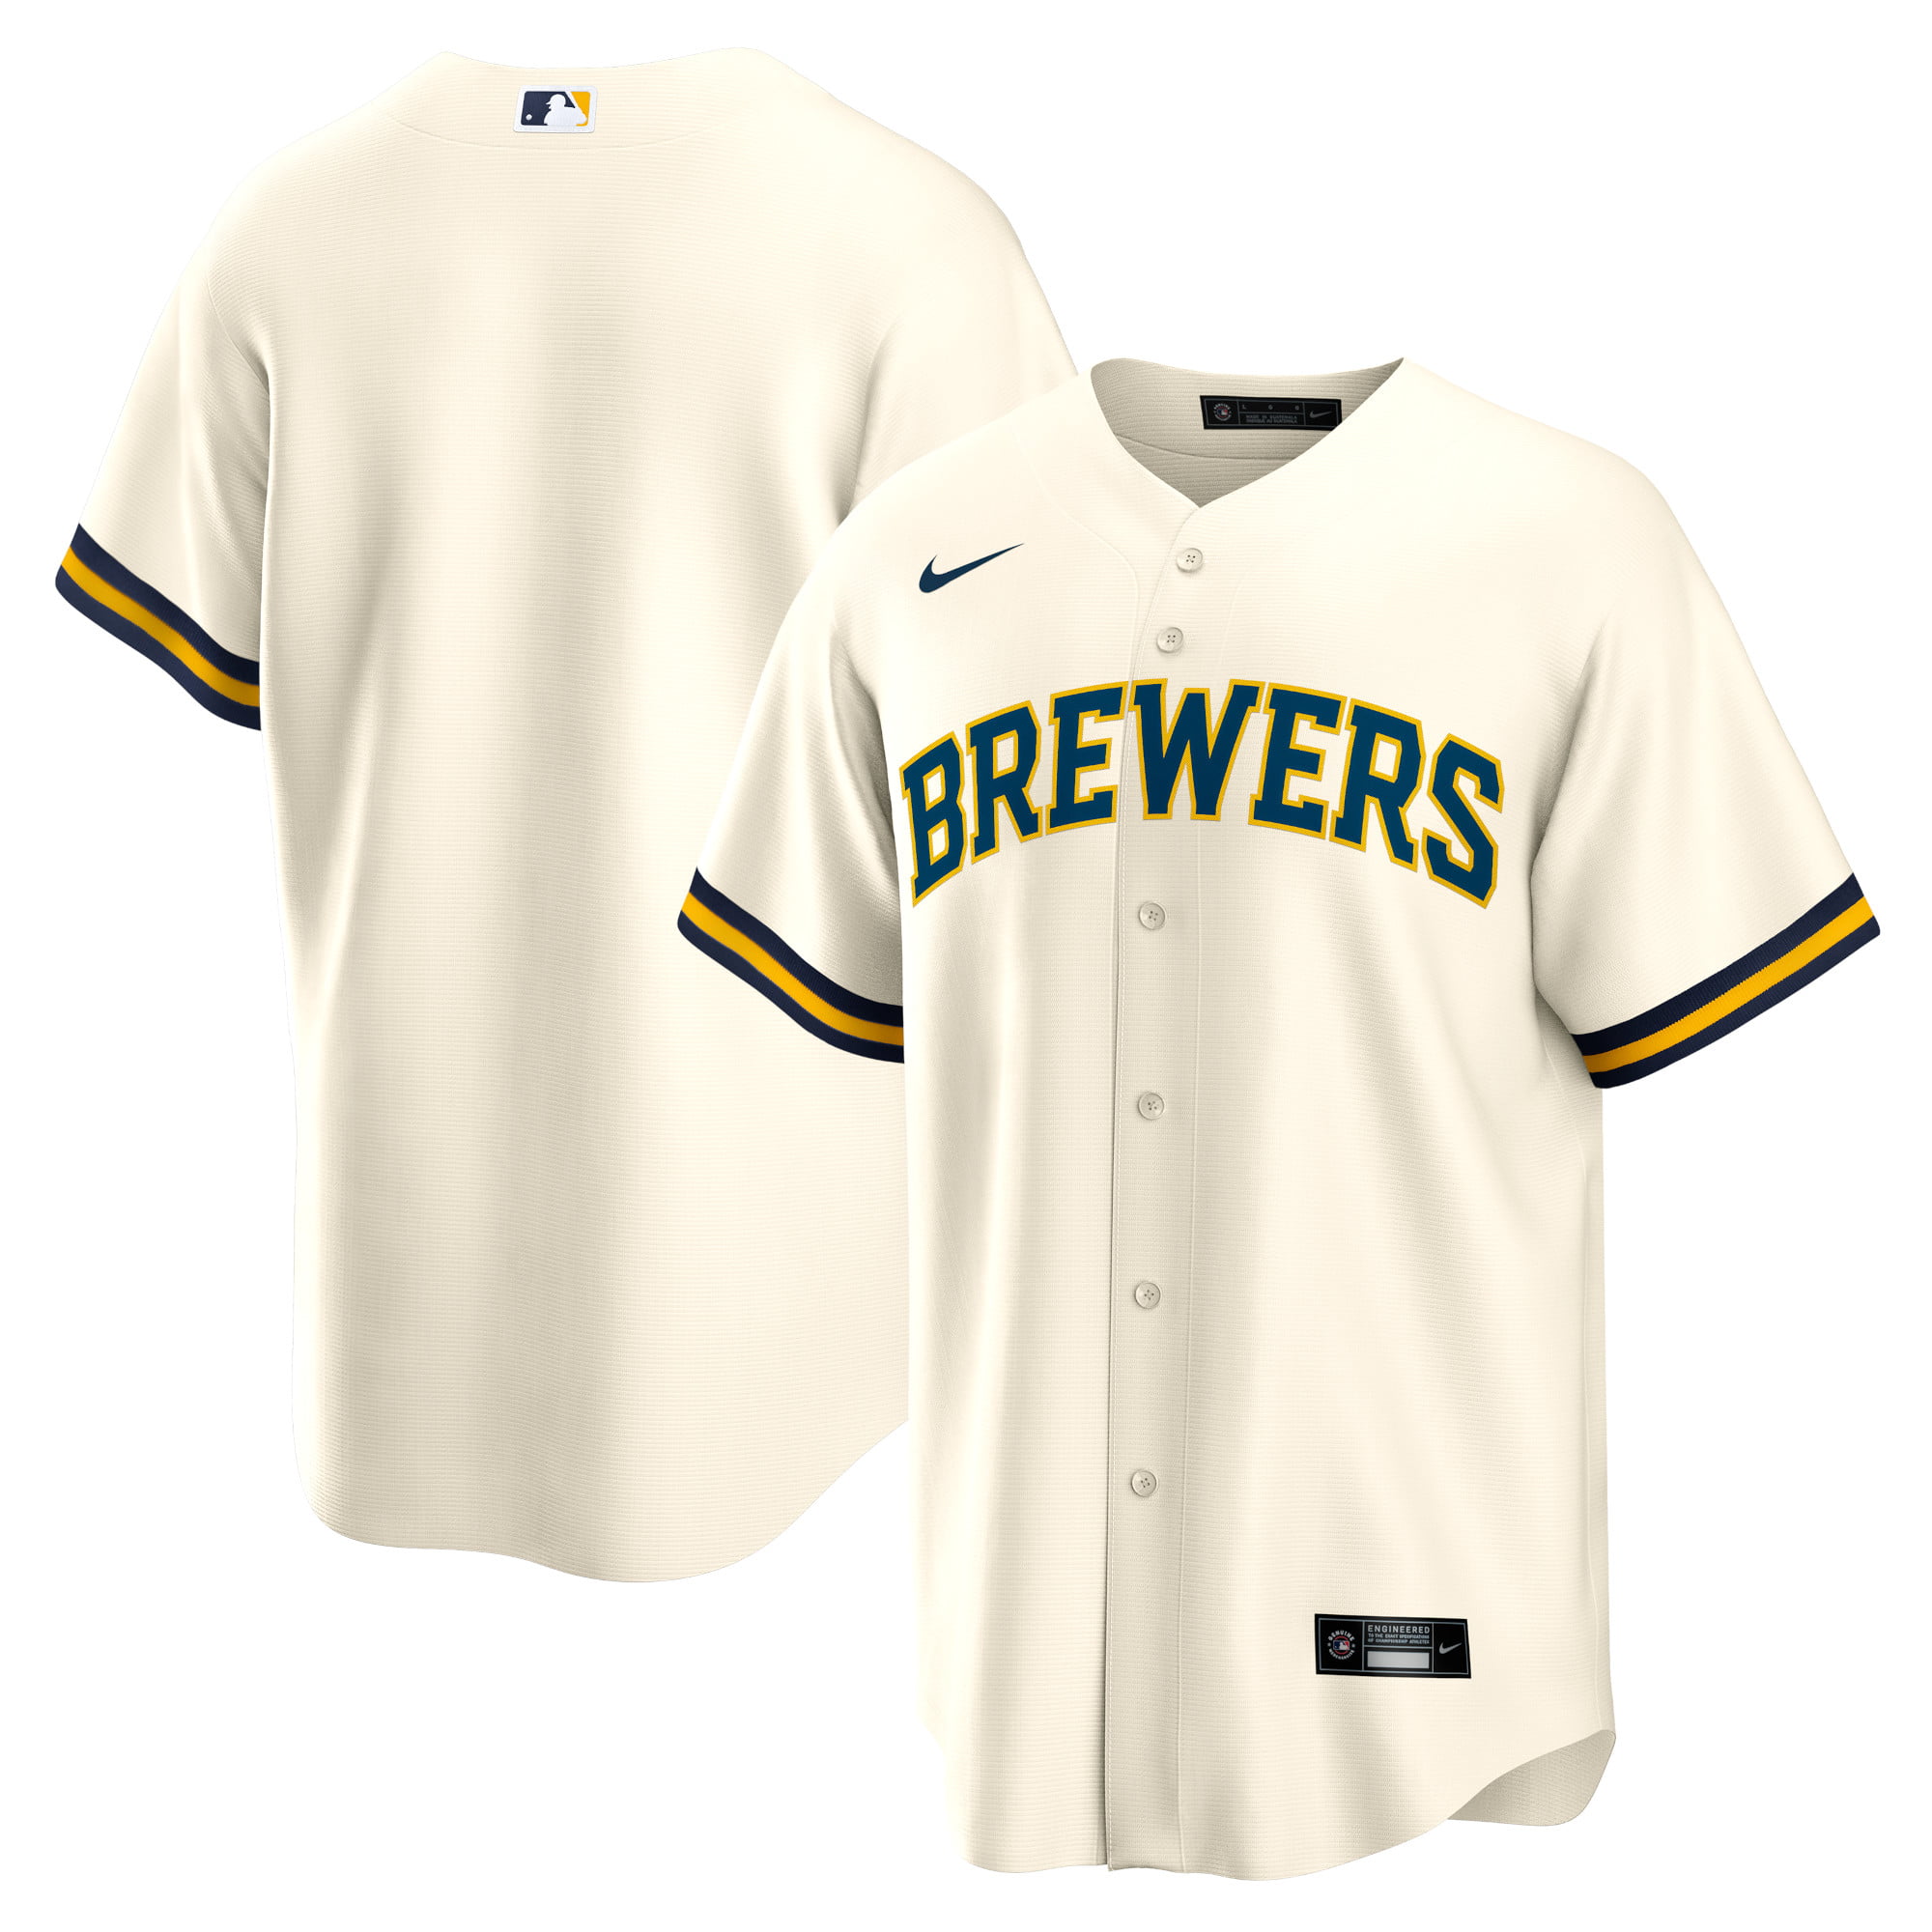 brewers replica jersey